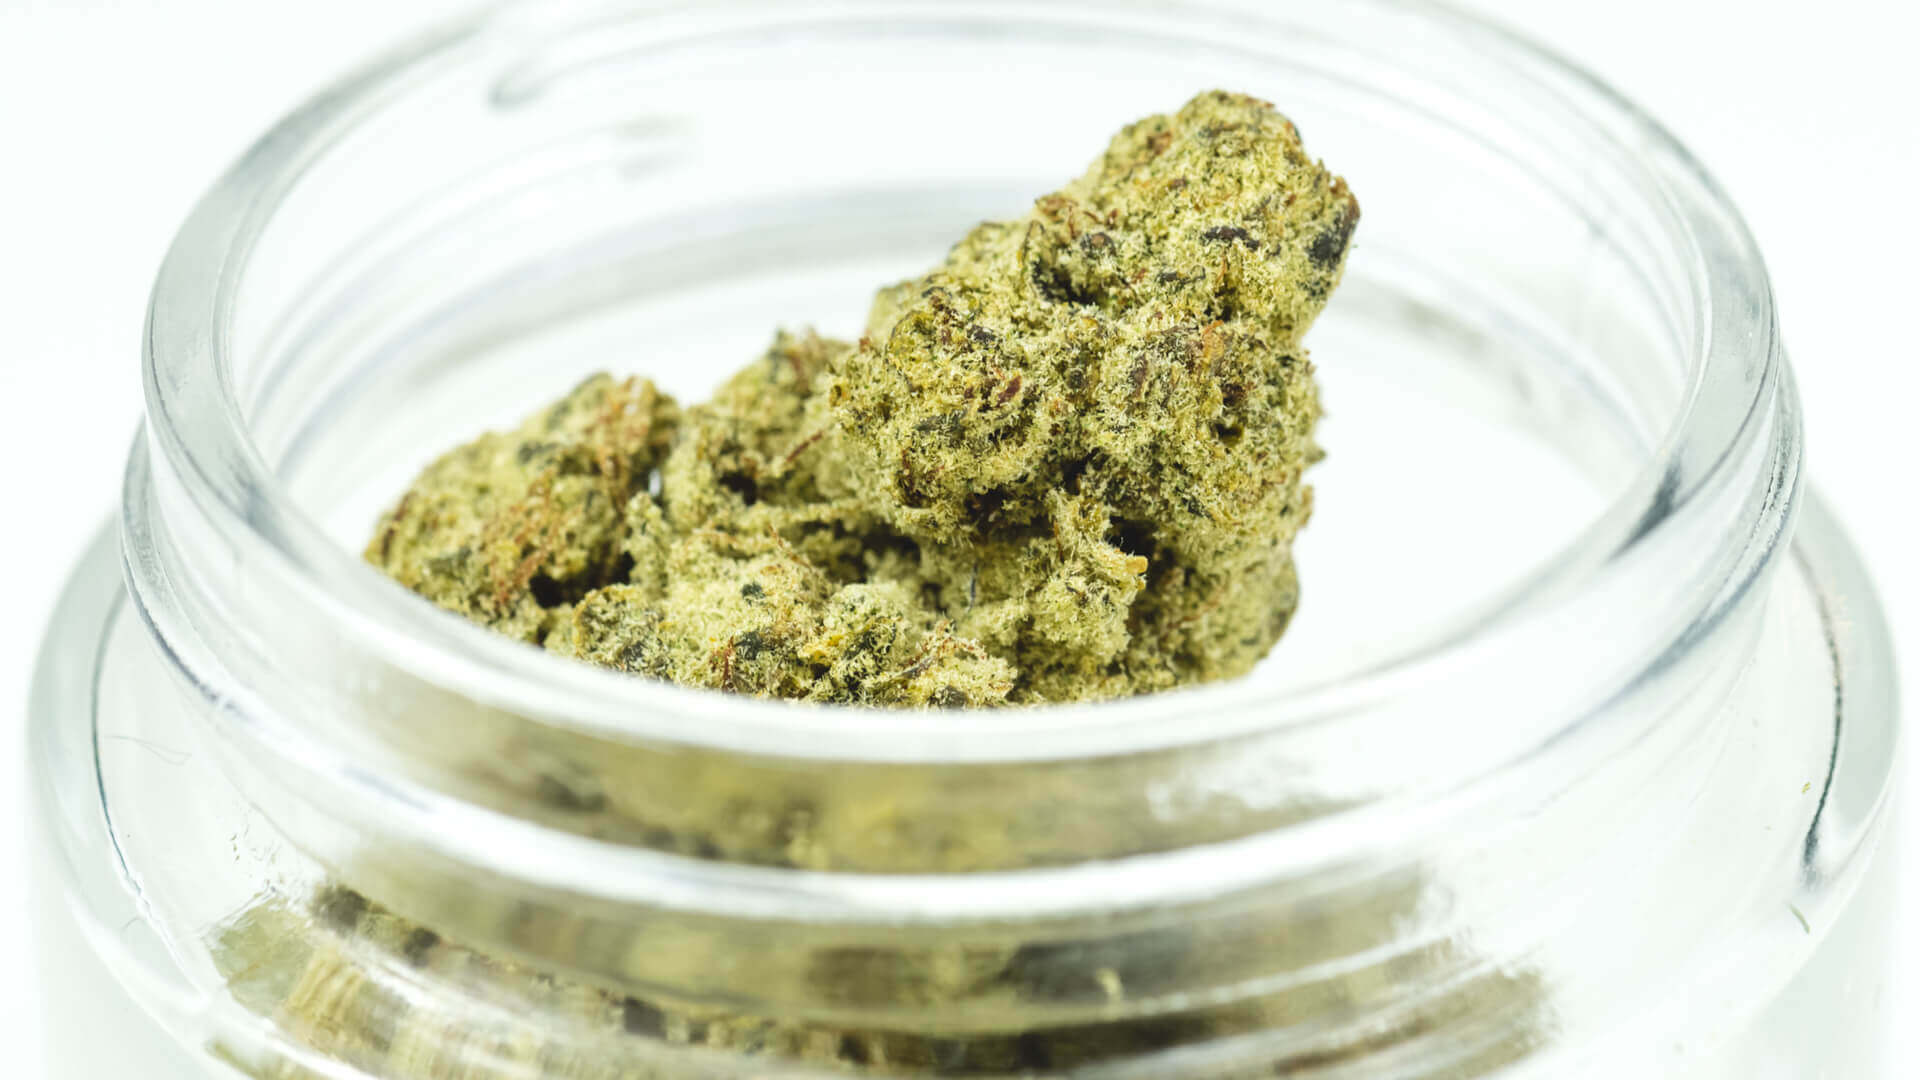 A glass jar full of moon rocks cannabis